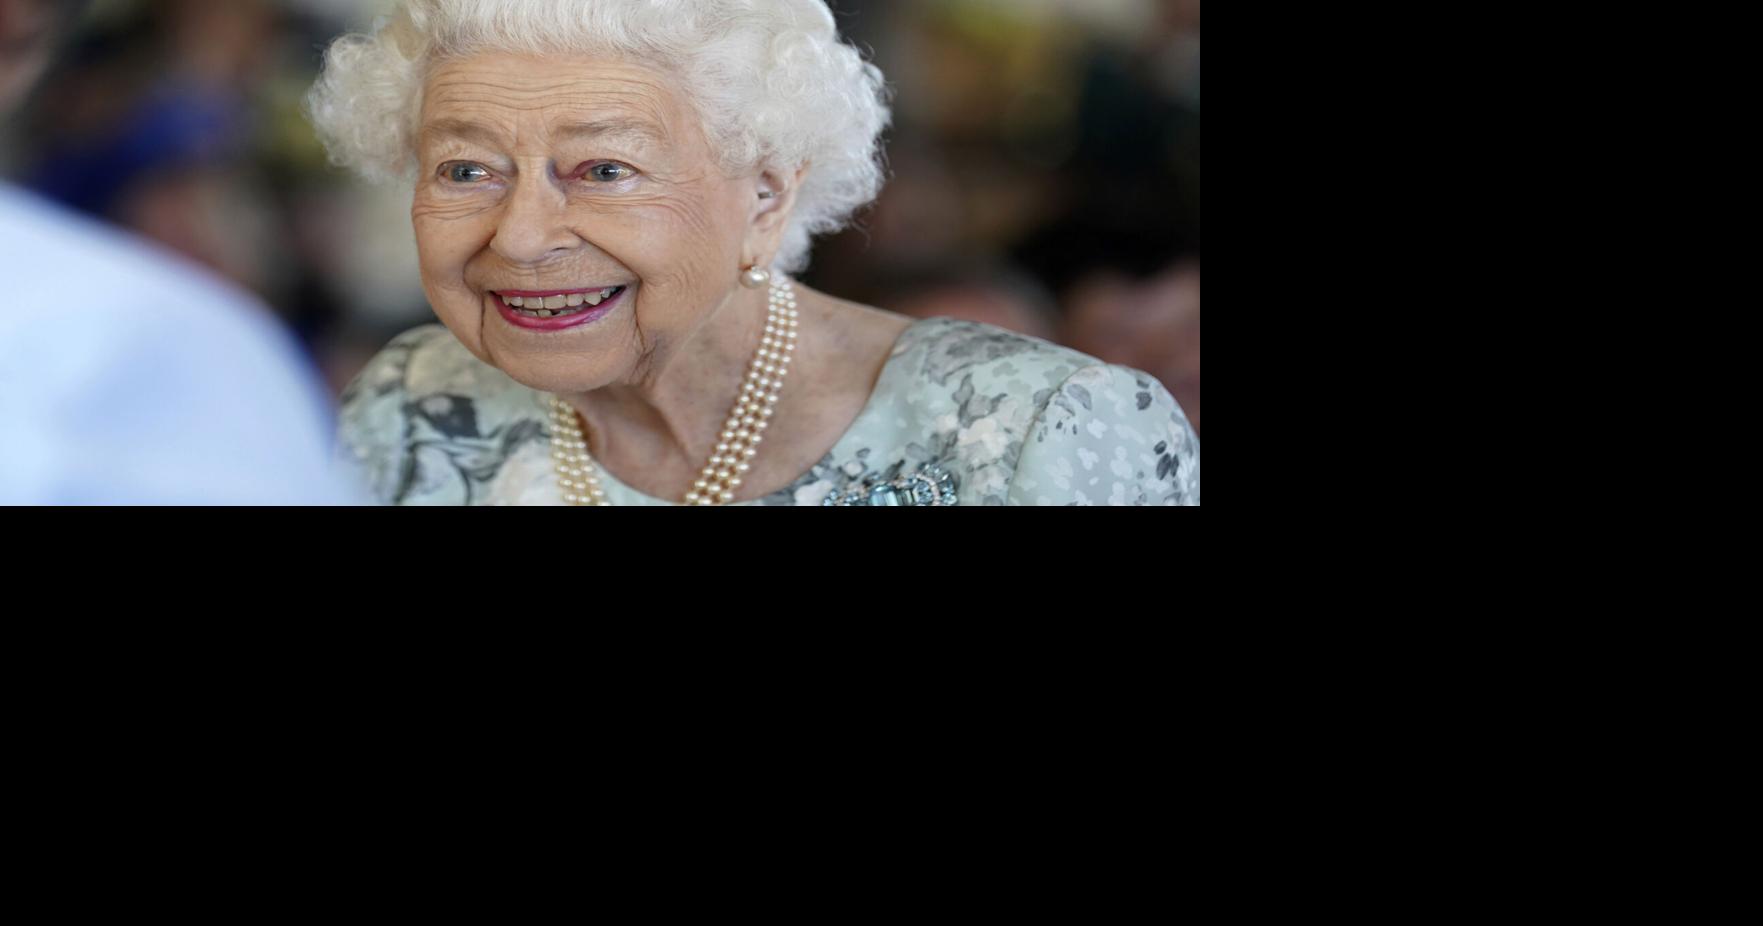 Remembering Hawaii’s historical ties to Great Britain following Queen Elizabeth II’s death